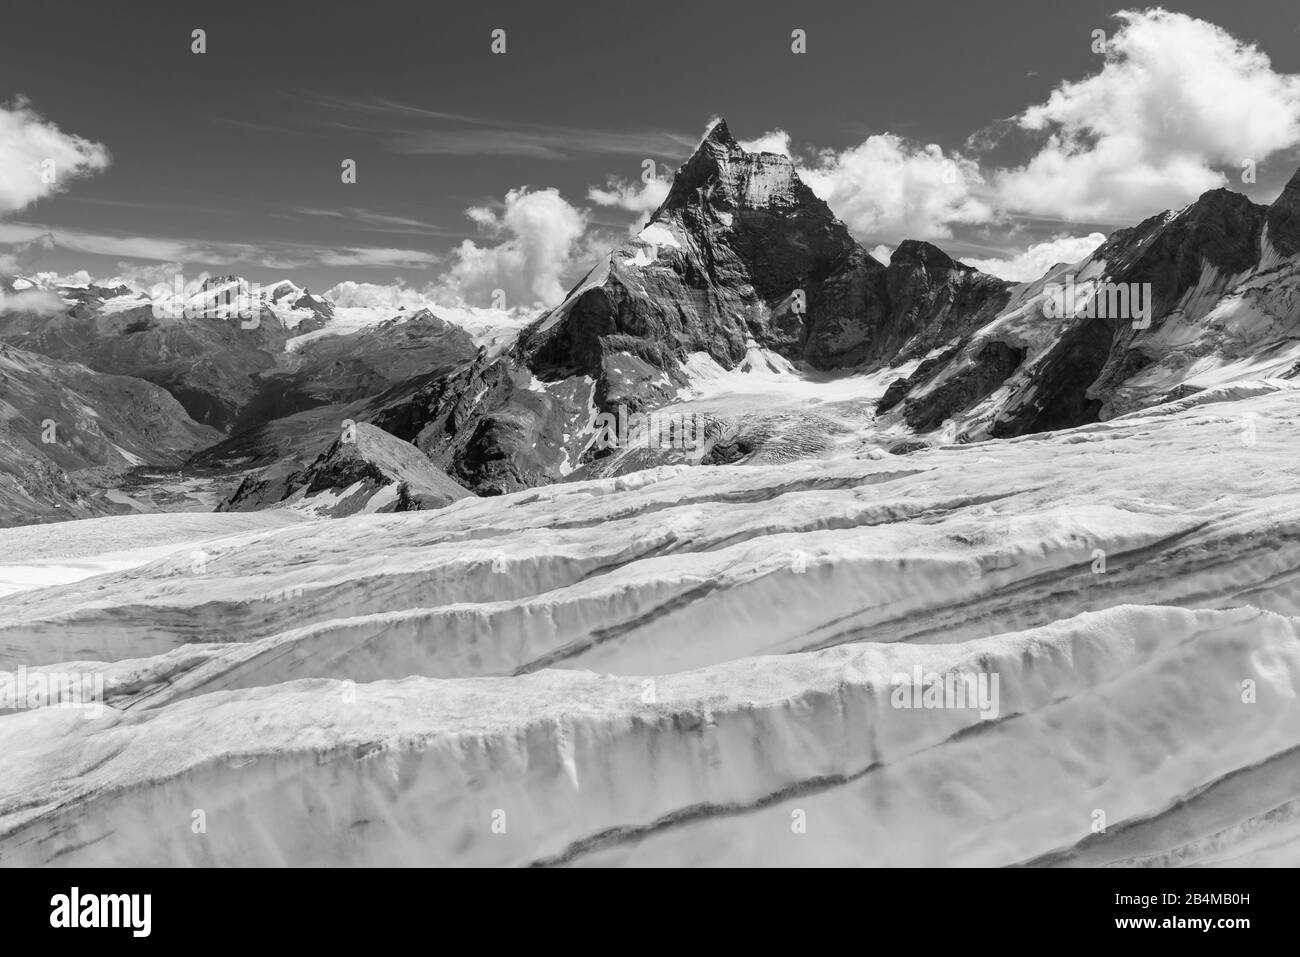 Svizzera, Vallese, Haute Route Chamonix Zermatt, crepacci sul ghiacciaio Stockji con Allalinhorn, Rimpfischhorn, Strahlhorn e Cervino - Zmuttgrat, West Face e Liongrat Foto Stock